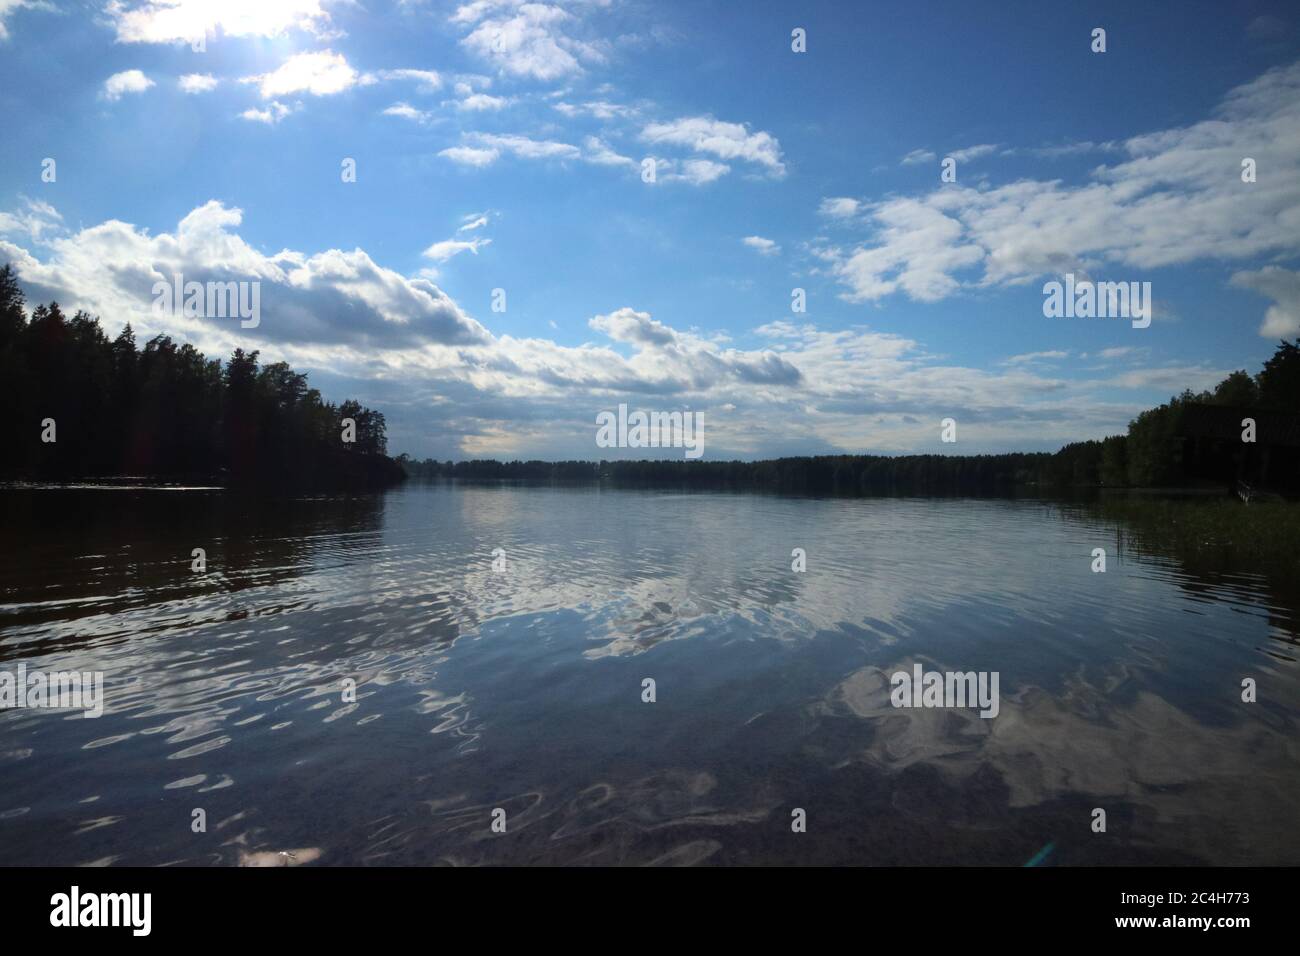 Tampaja lake in Kirkkonummi, Finland on a bright summer day Stock Photo